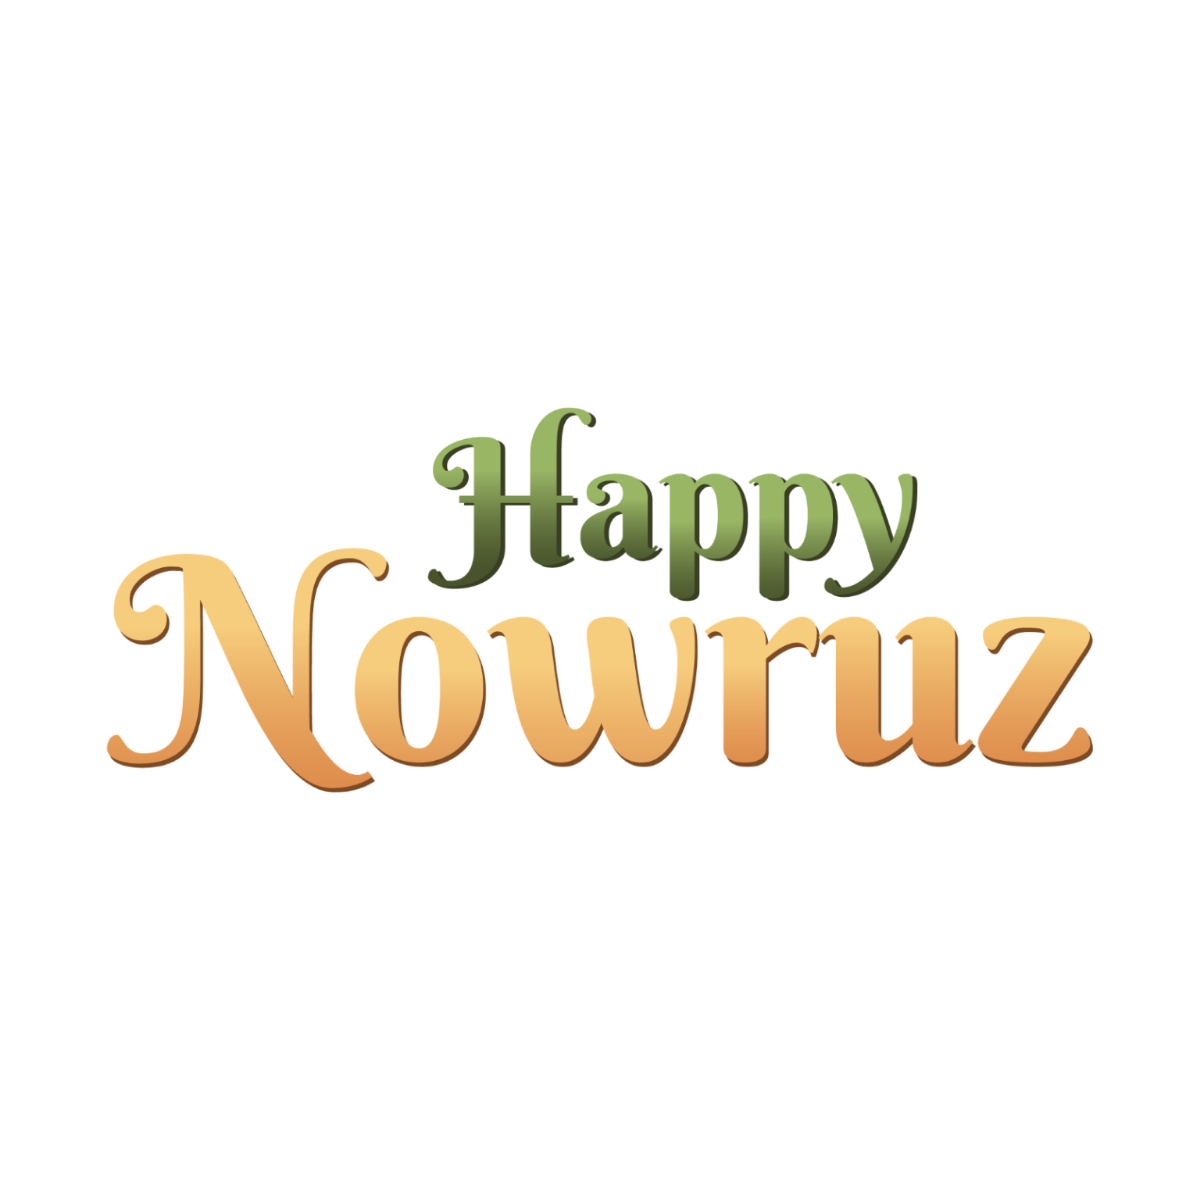 Nowruz Text Effect Template